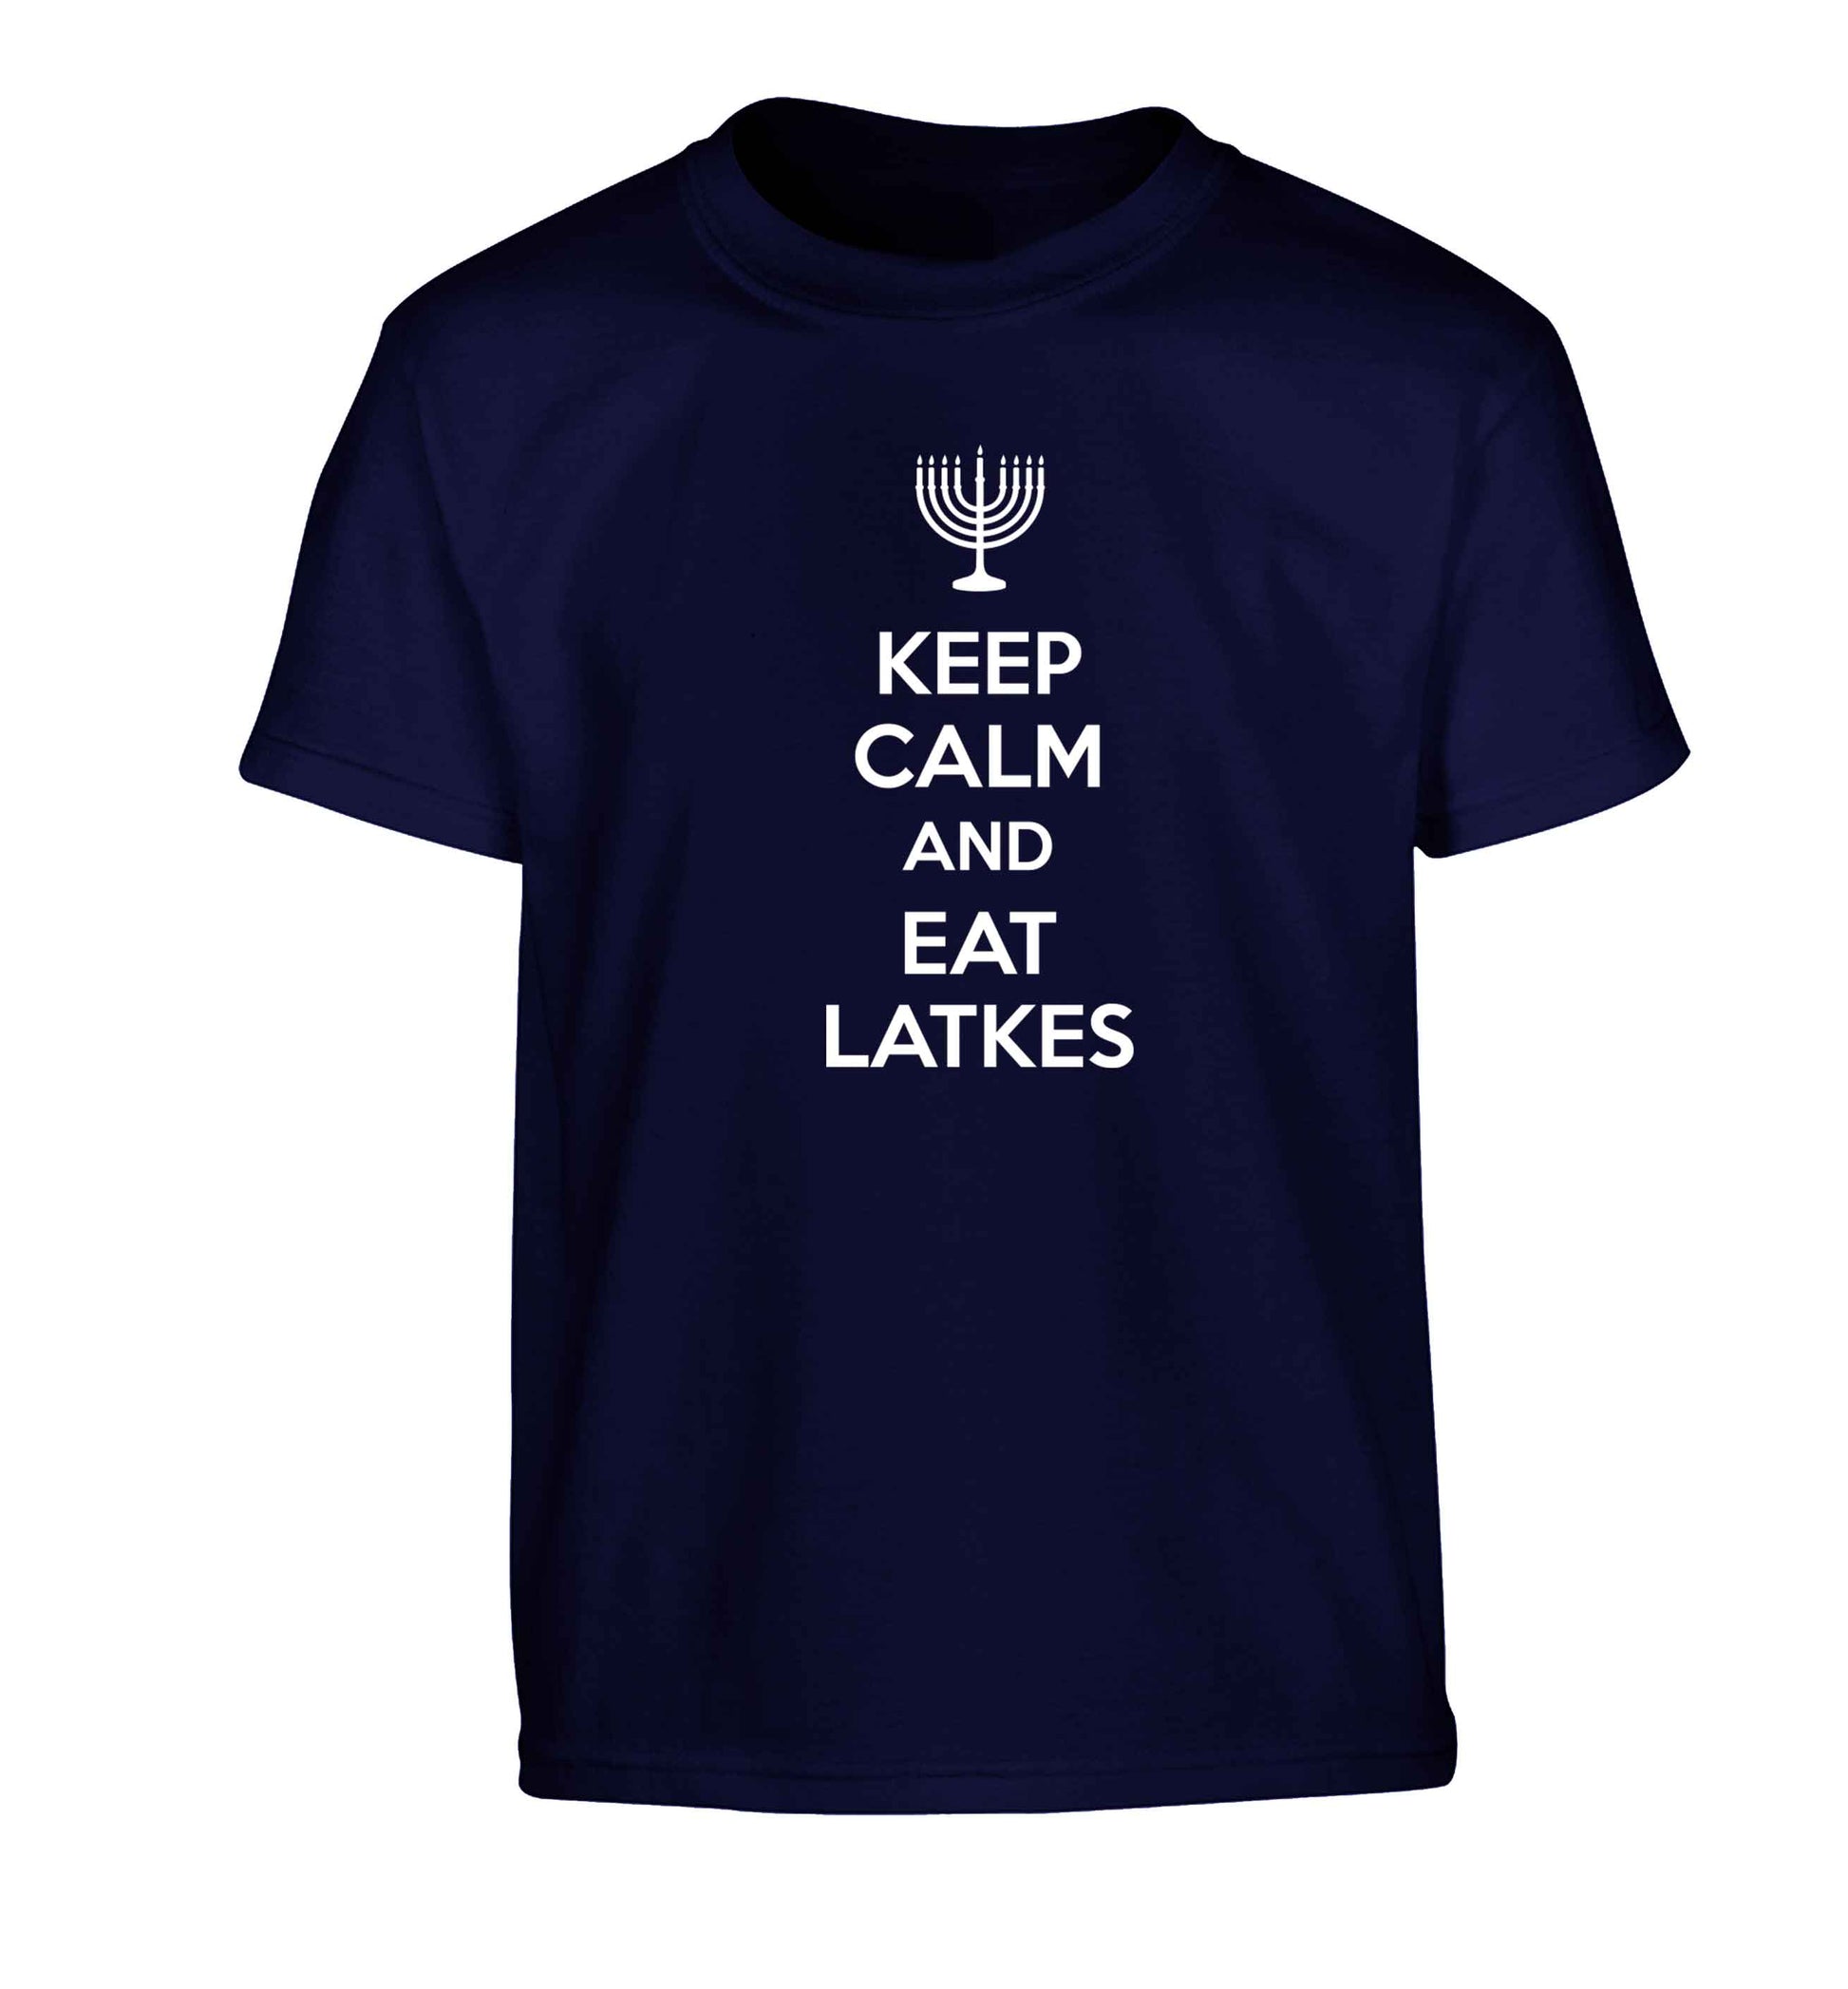 Keep calm and eat latkes Children's navy Tshirt 12-13 Years